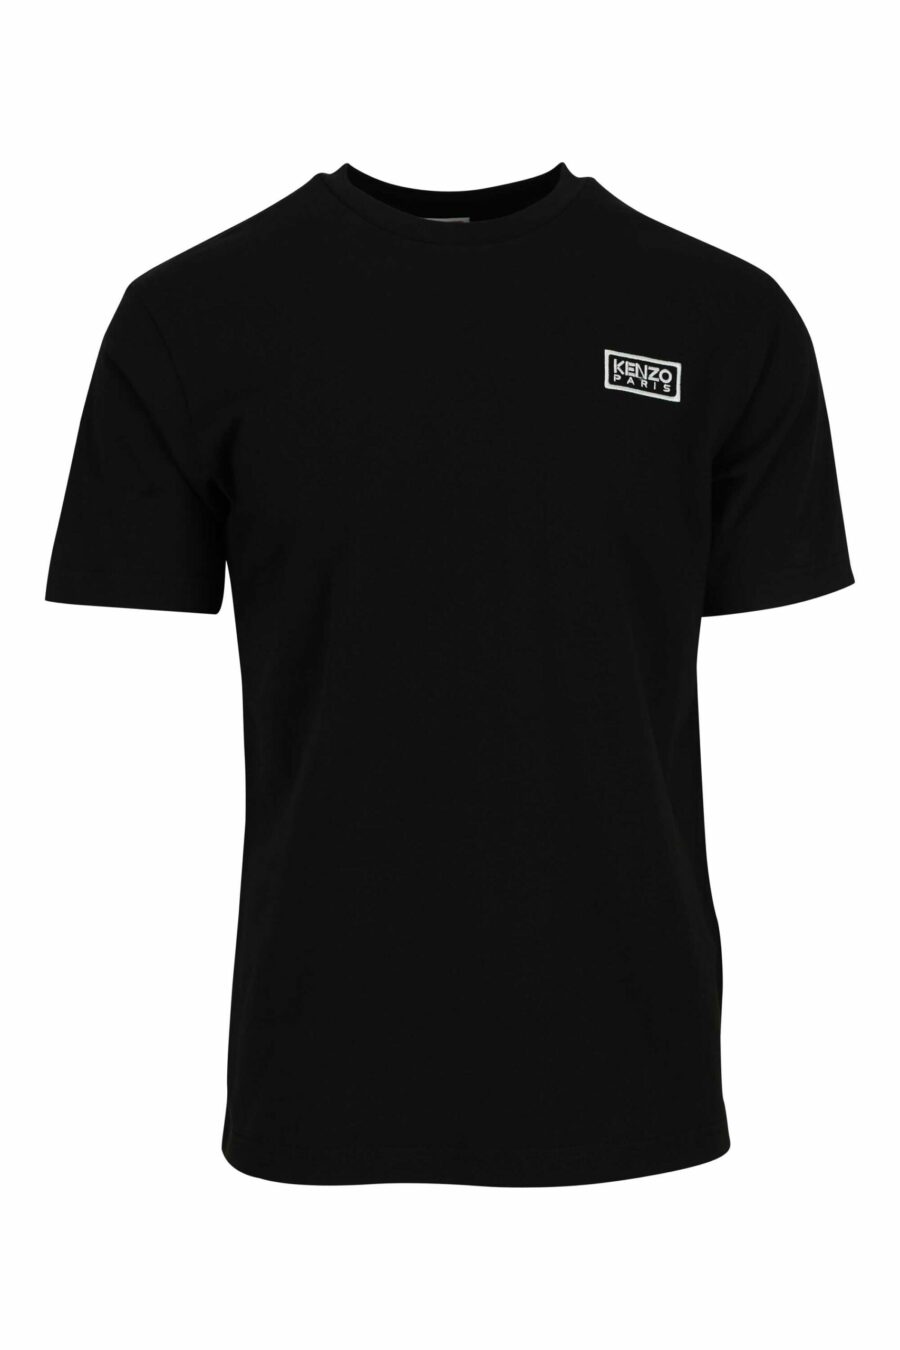 T-shirt preta com minilogo "KP classic" - 3612230624443 scaled